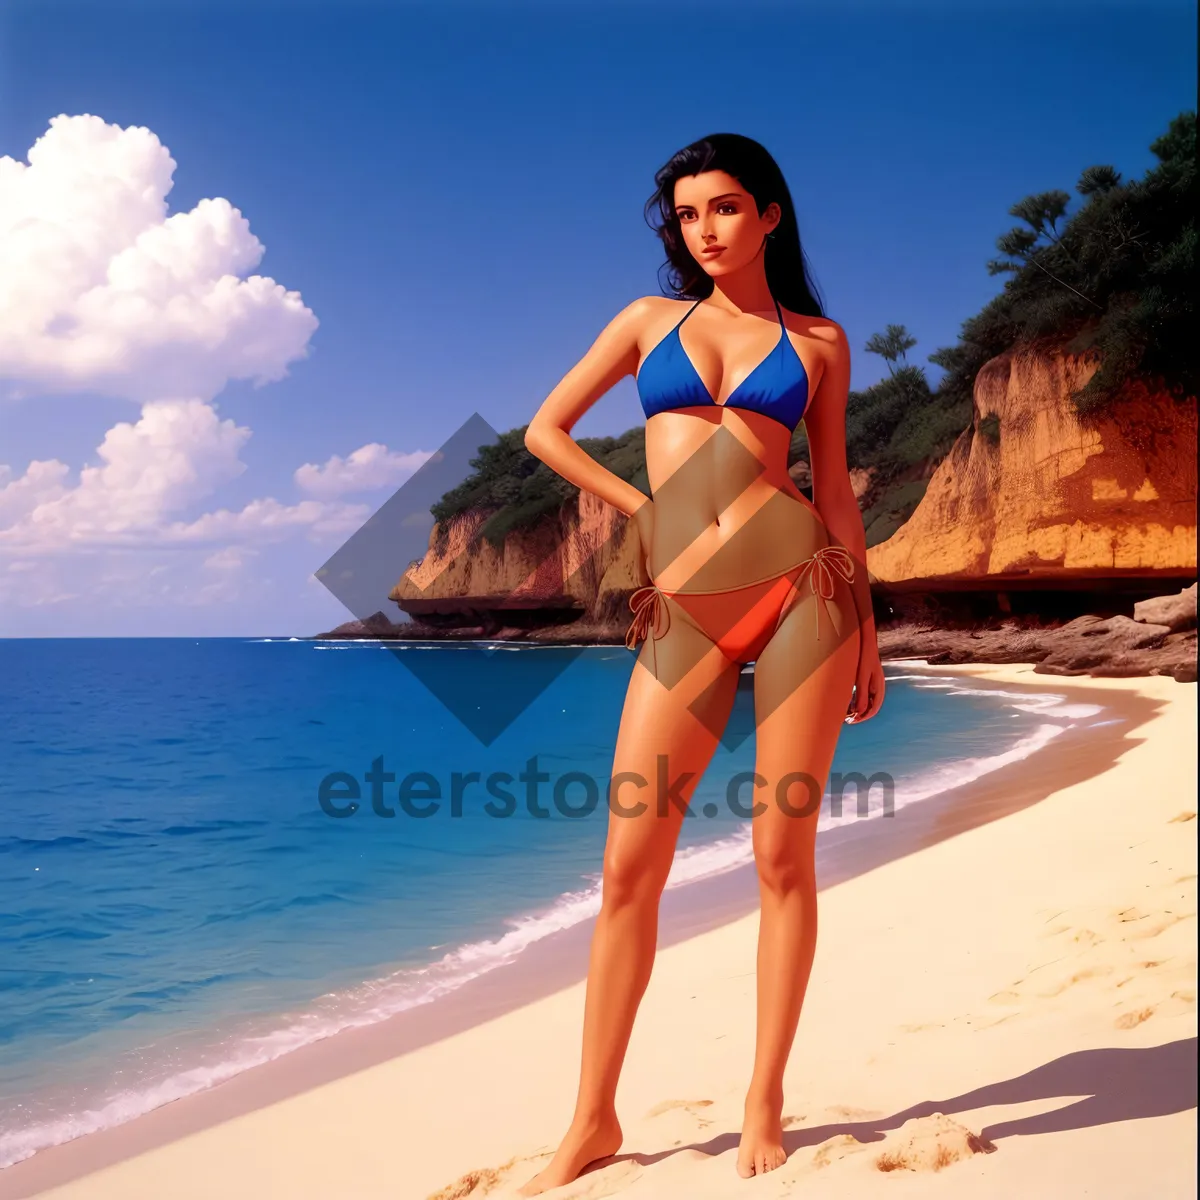 Picture of Sun-kissed Bikini Babe Enjoying Tropical Beach